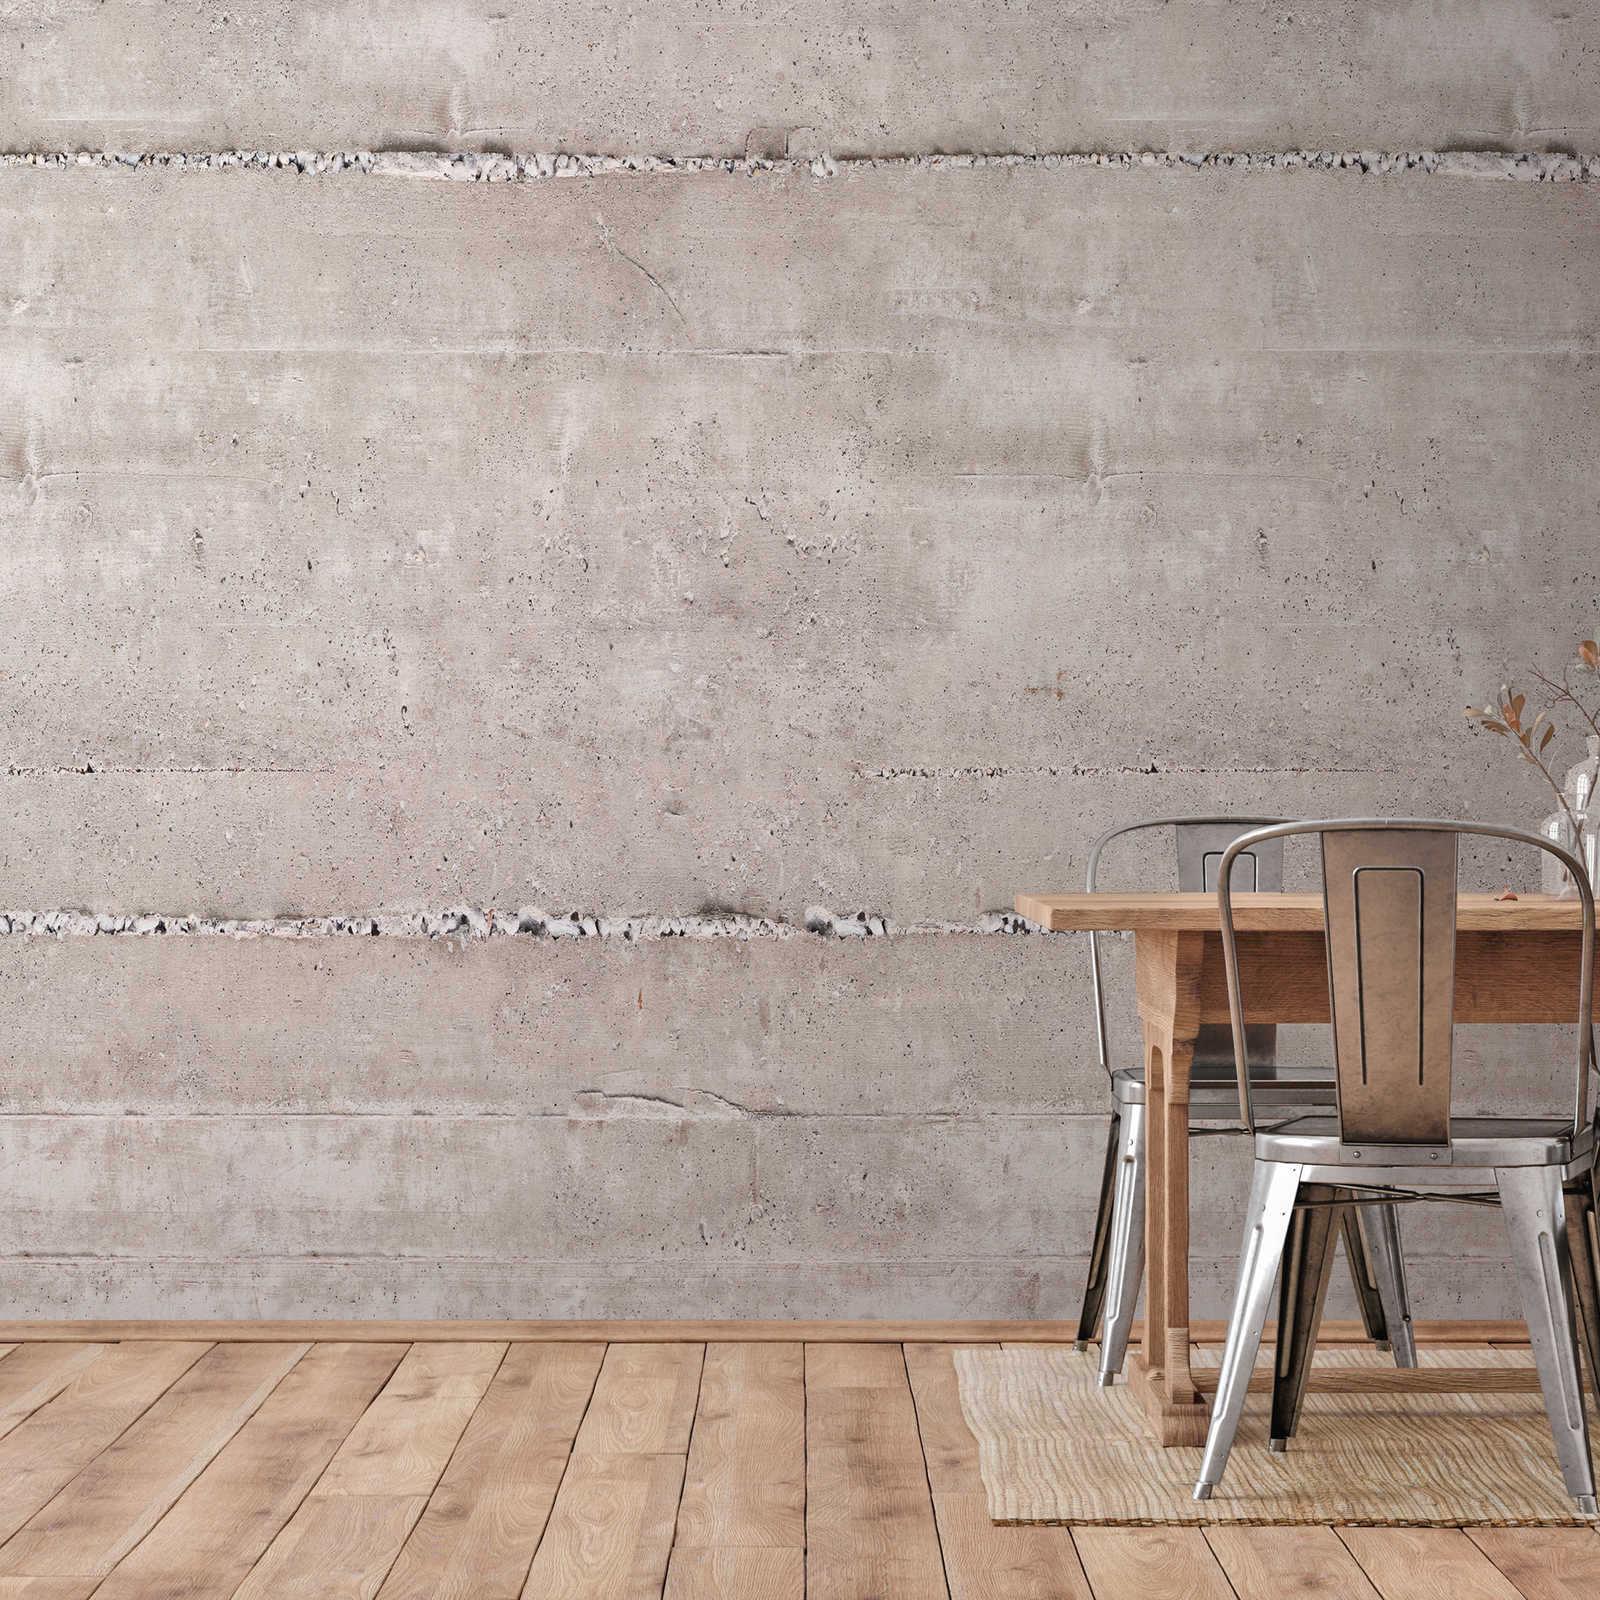 Concrete-look wallpaper in light colours - grey, cream
